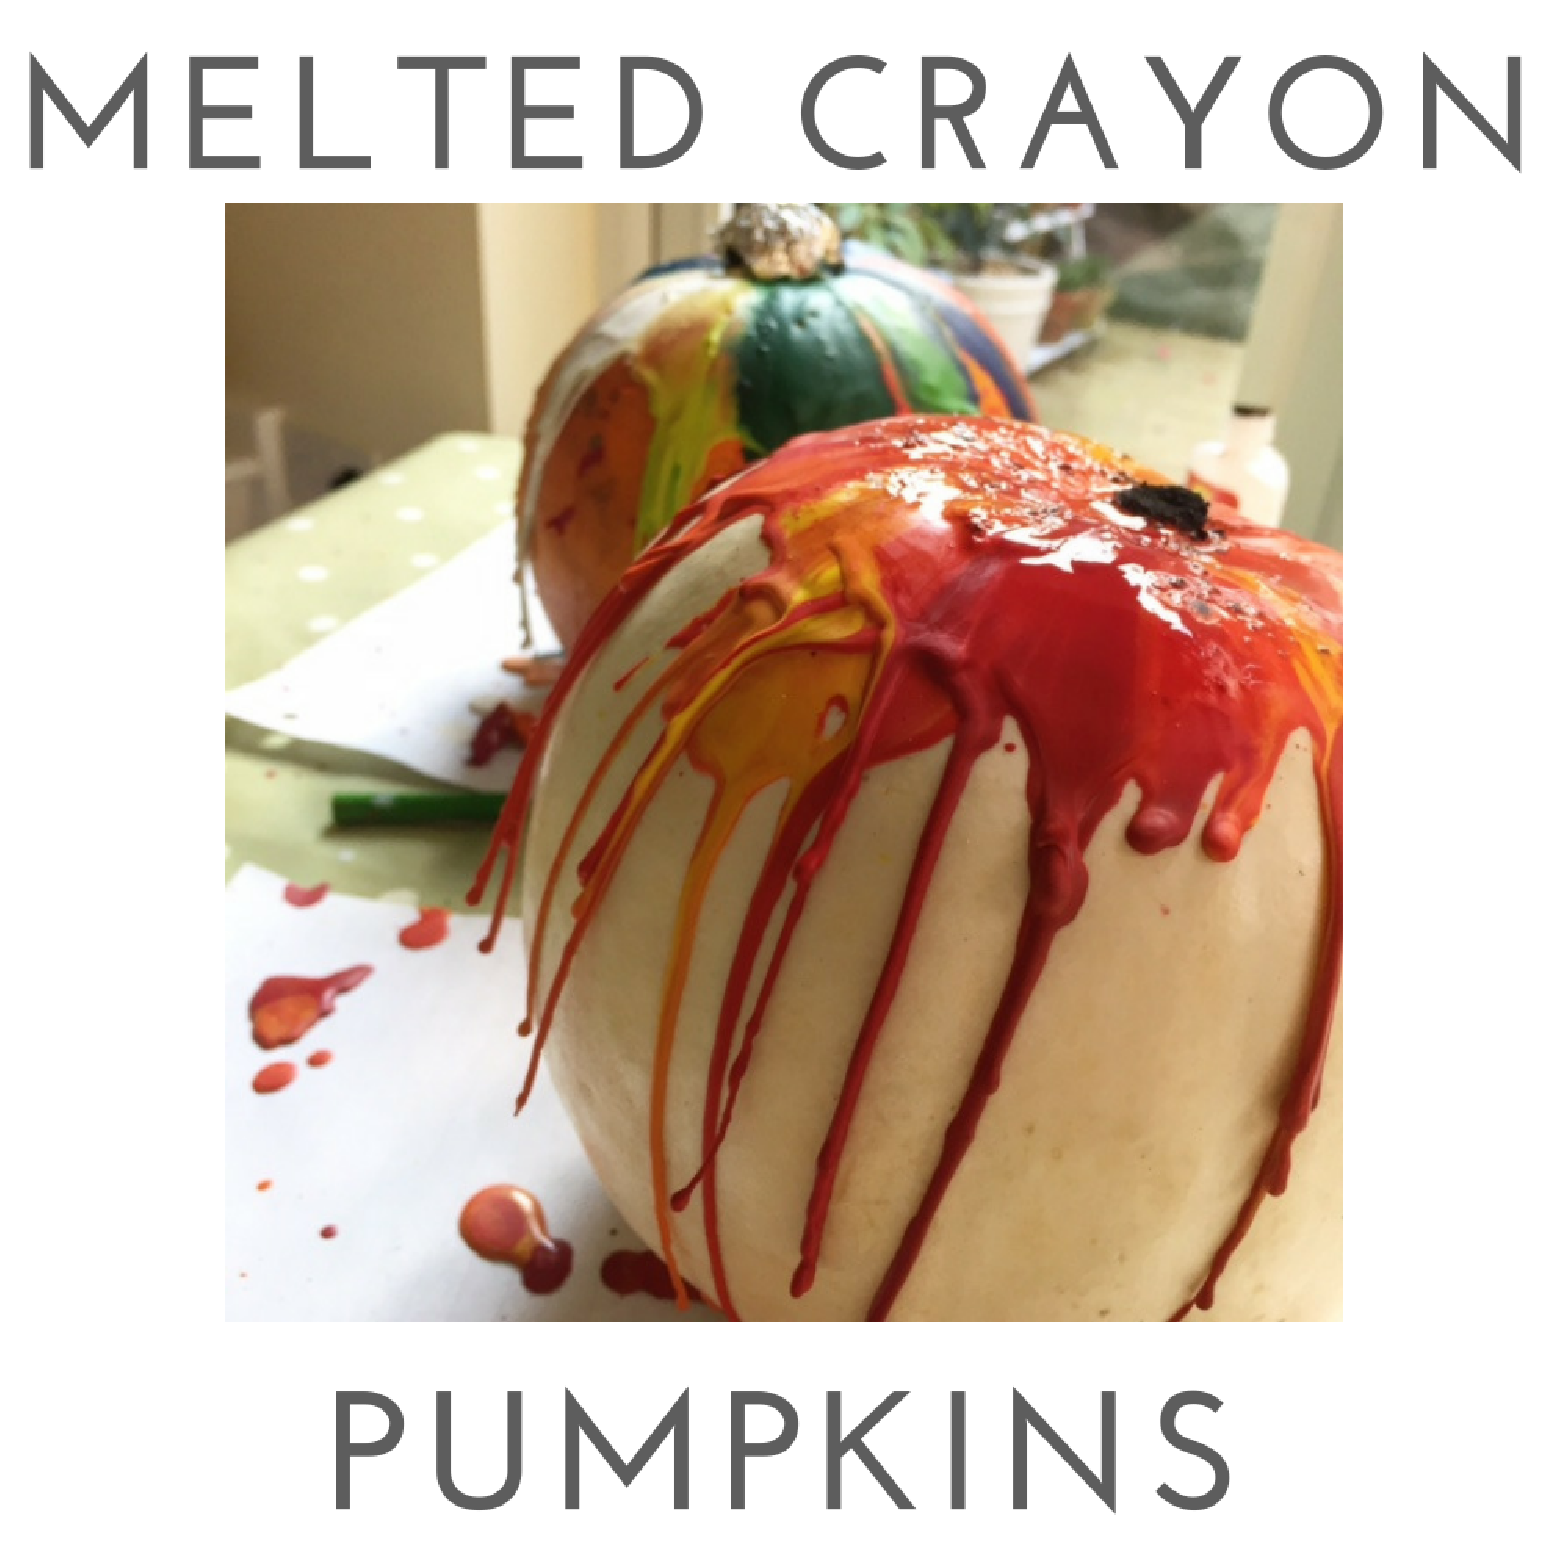 Melted-crayon-pumpkins.png